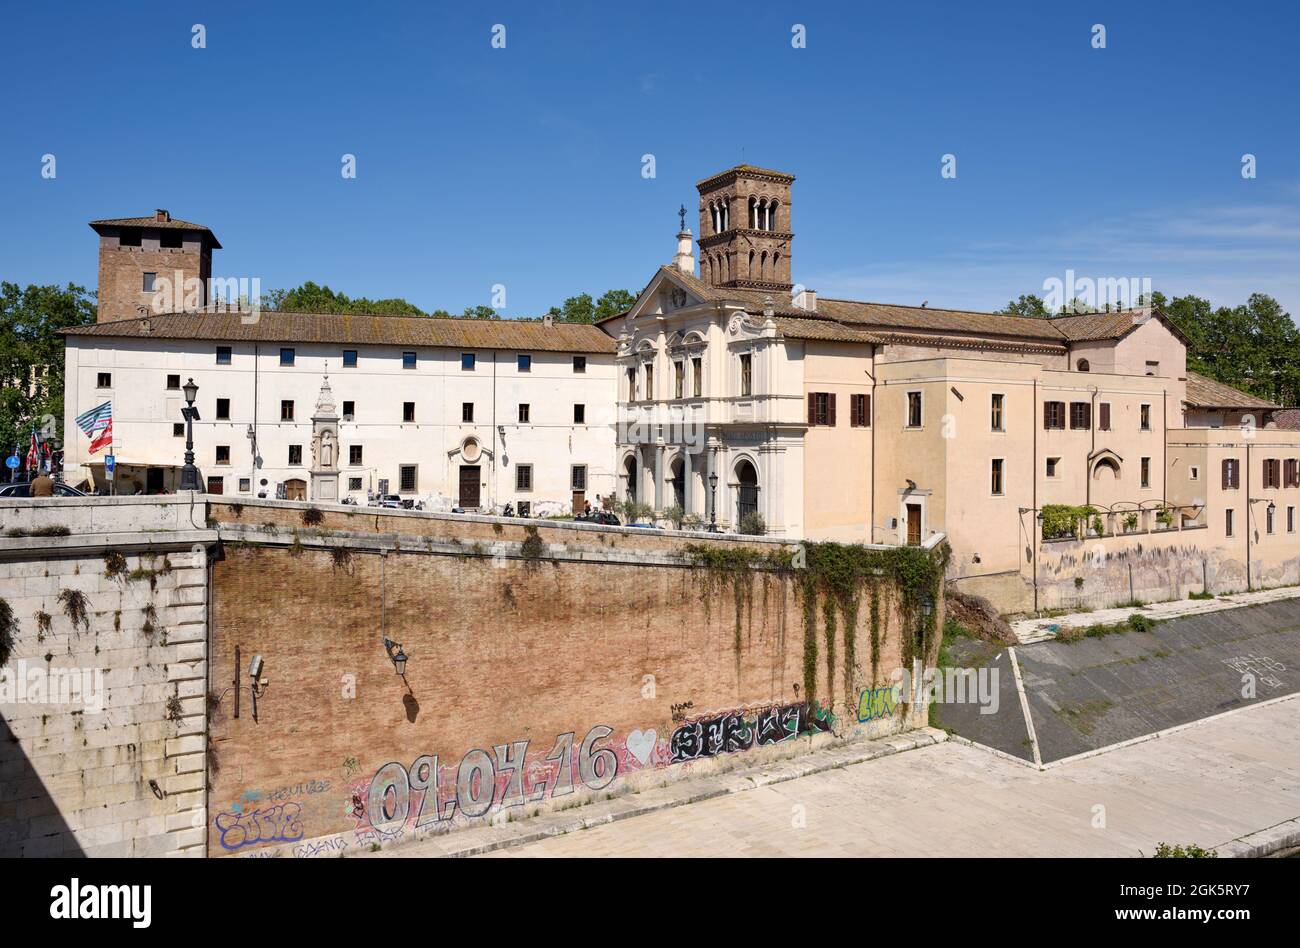 Italia, Roma, la isla Tiberina, la iglesia de San Bartolomeo all'isola Foto de stock